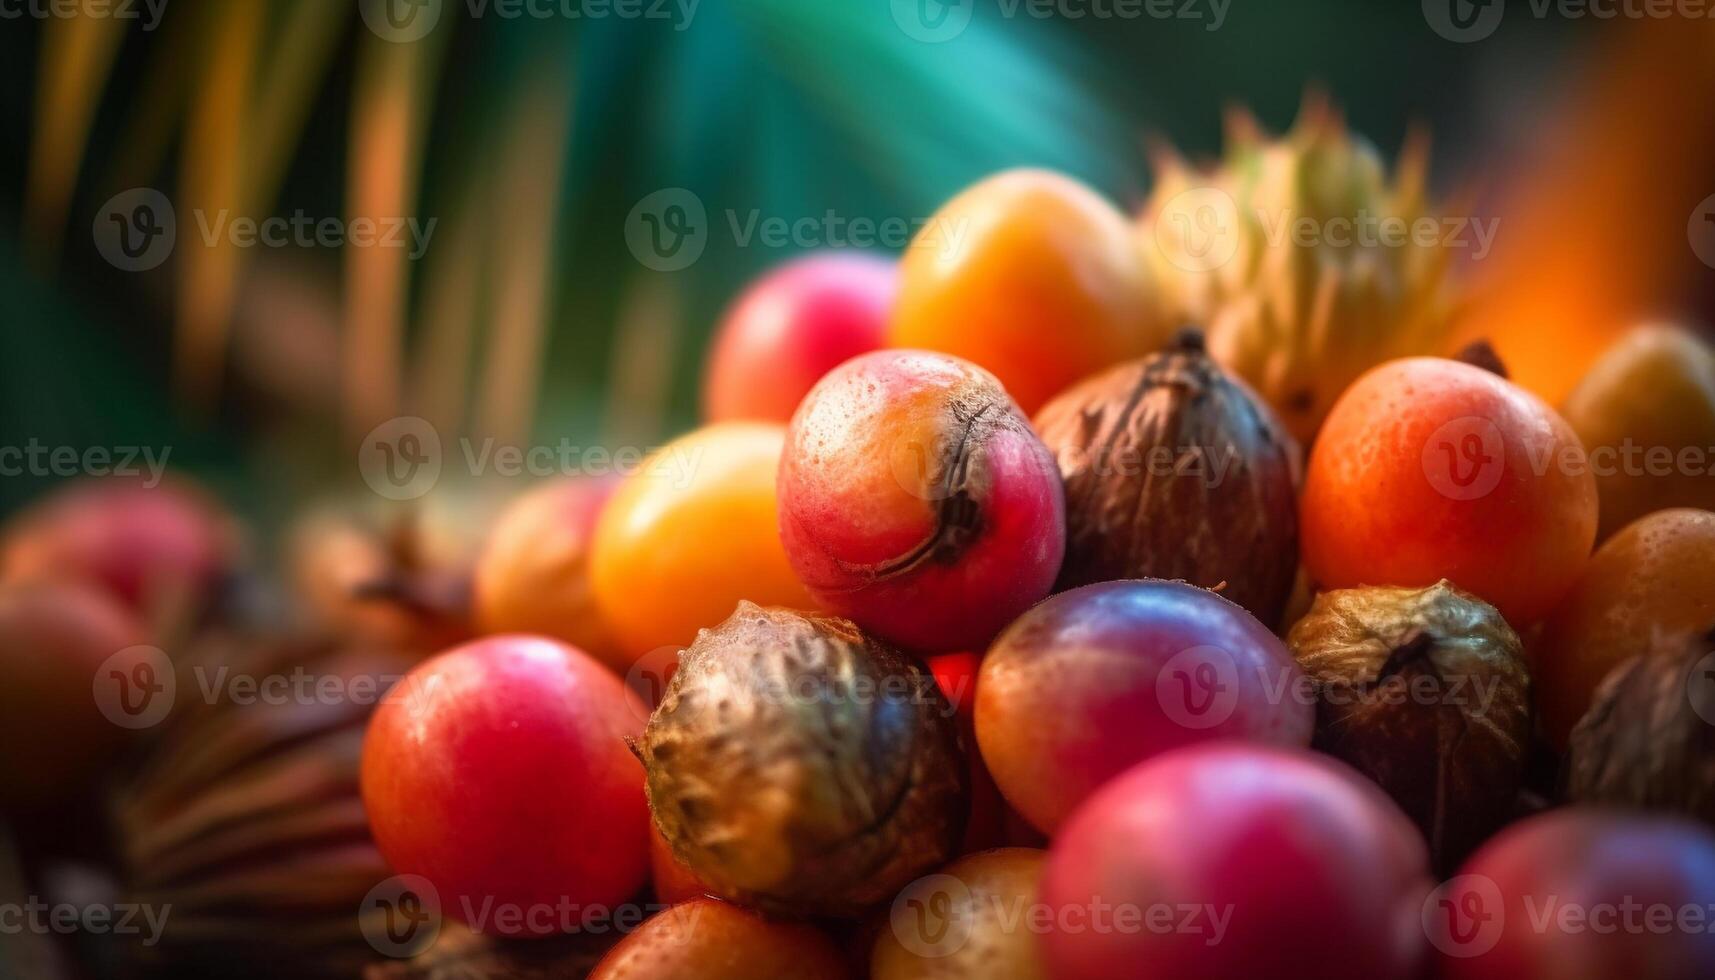 Organic tomato plant ripe for harvesting in fresh autumn season generated by AI photo